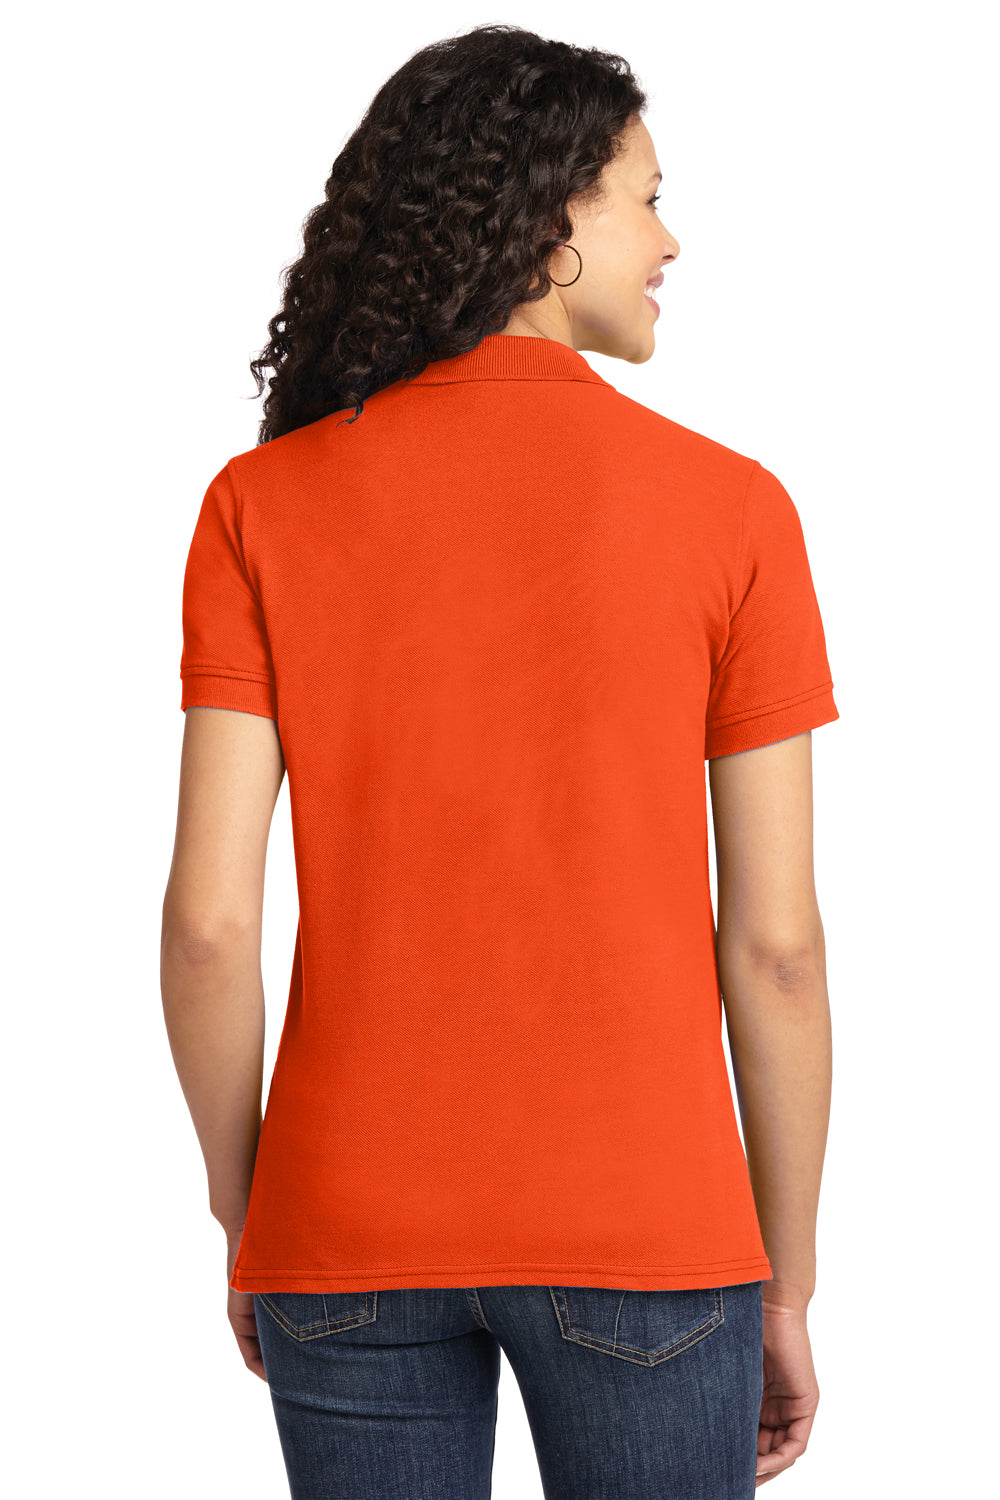 Port & Company LKP155 Womens Core Stain Resistant Short Sleeve Polo Shirt Orange Back